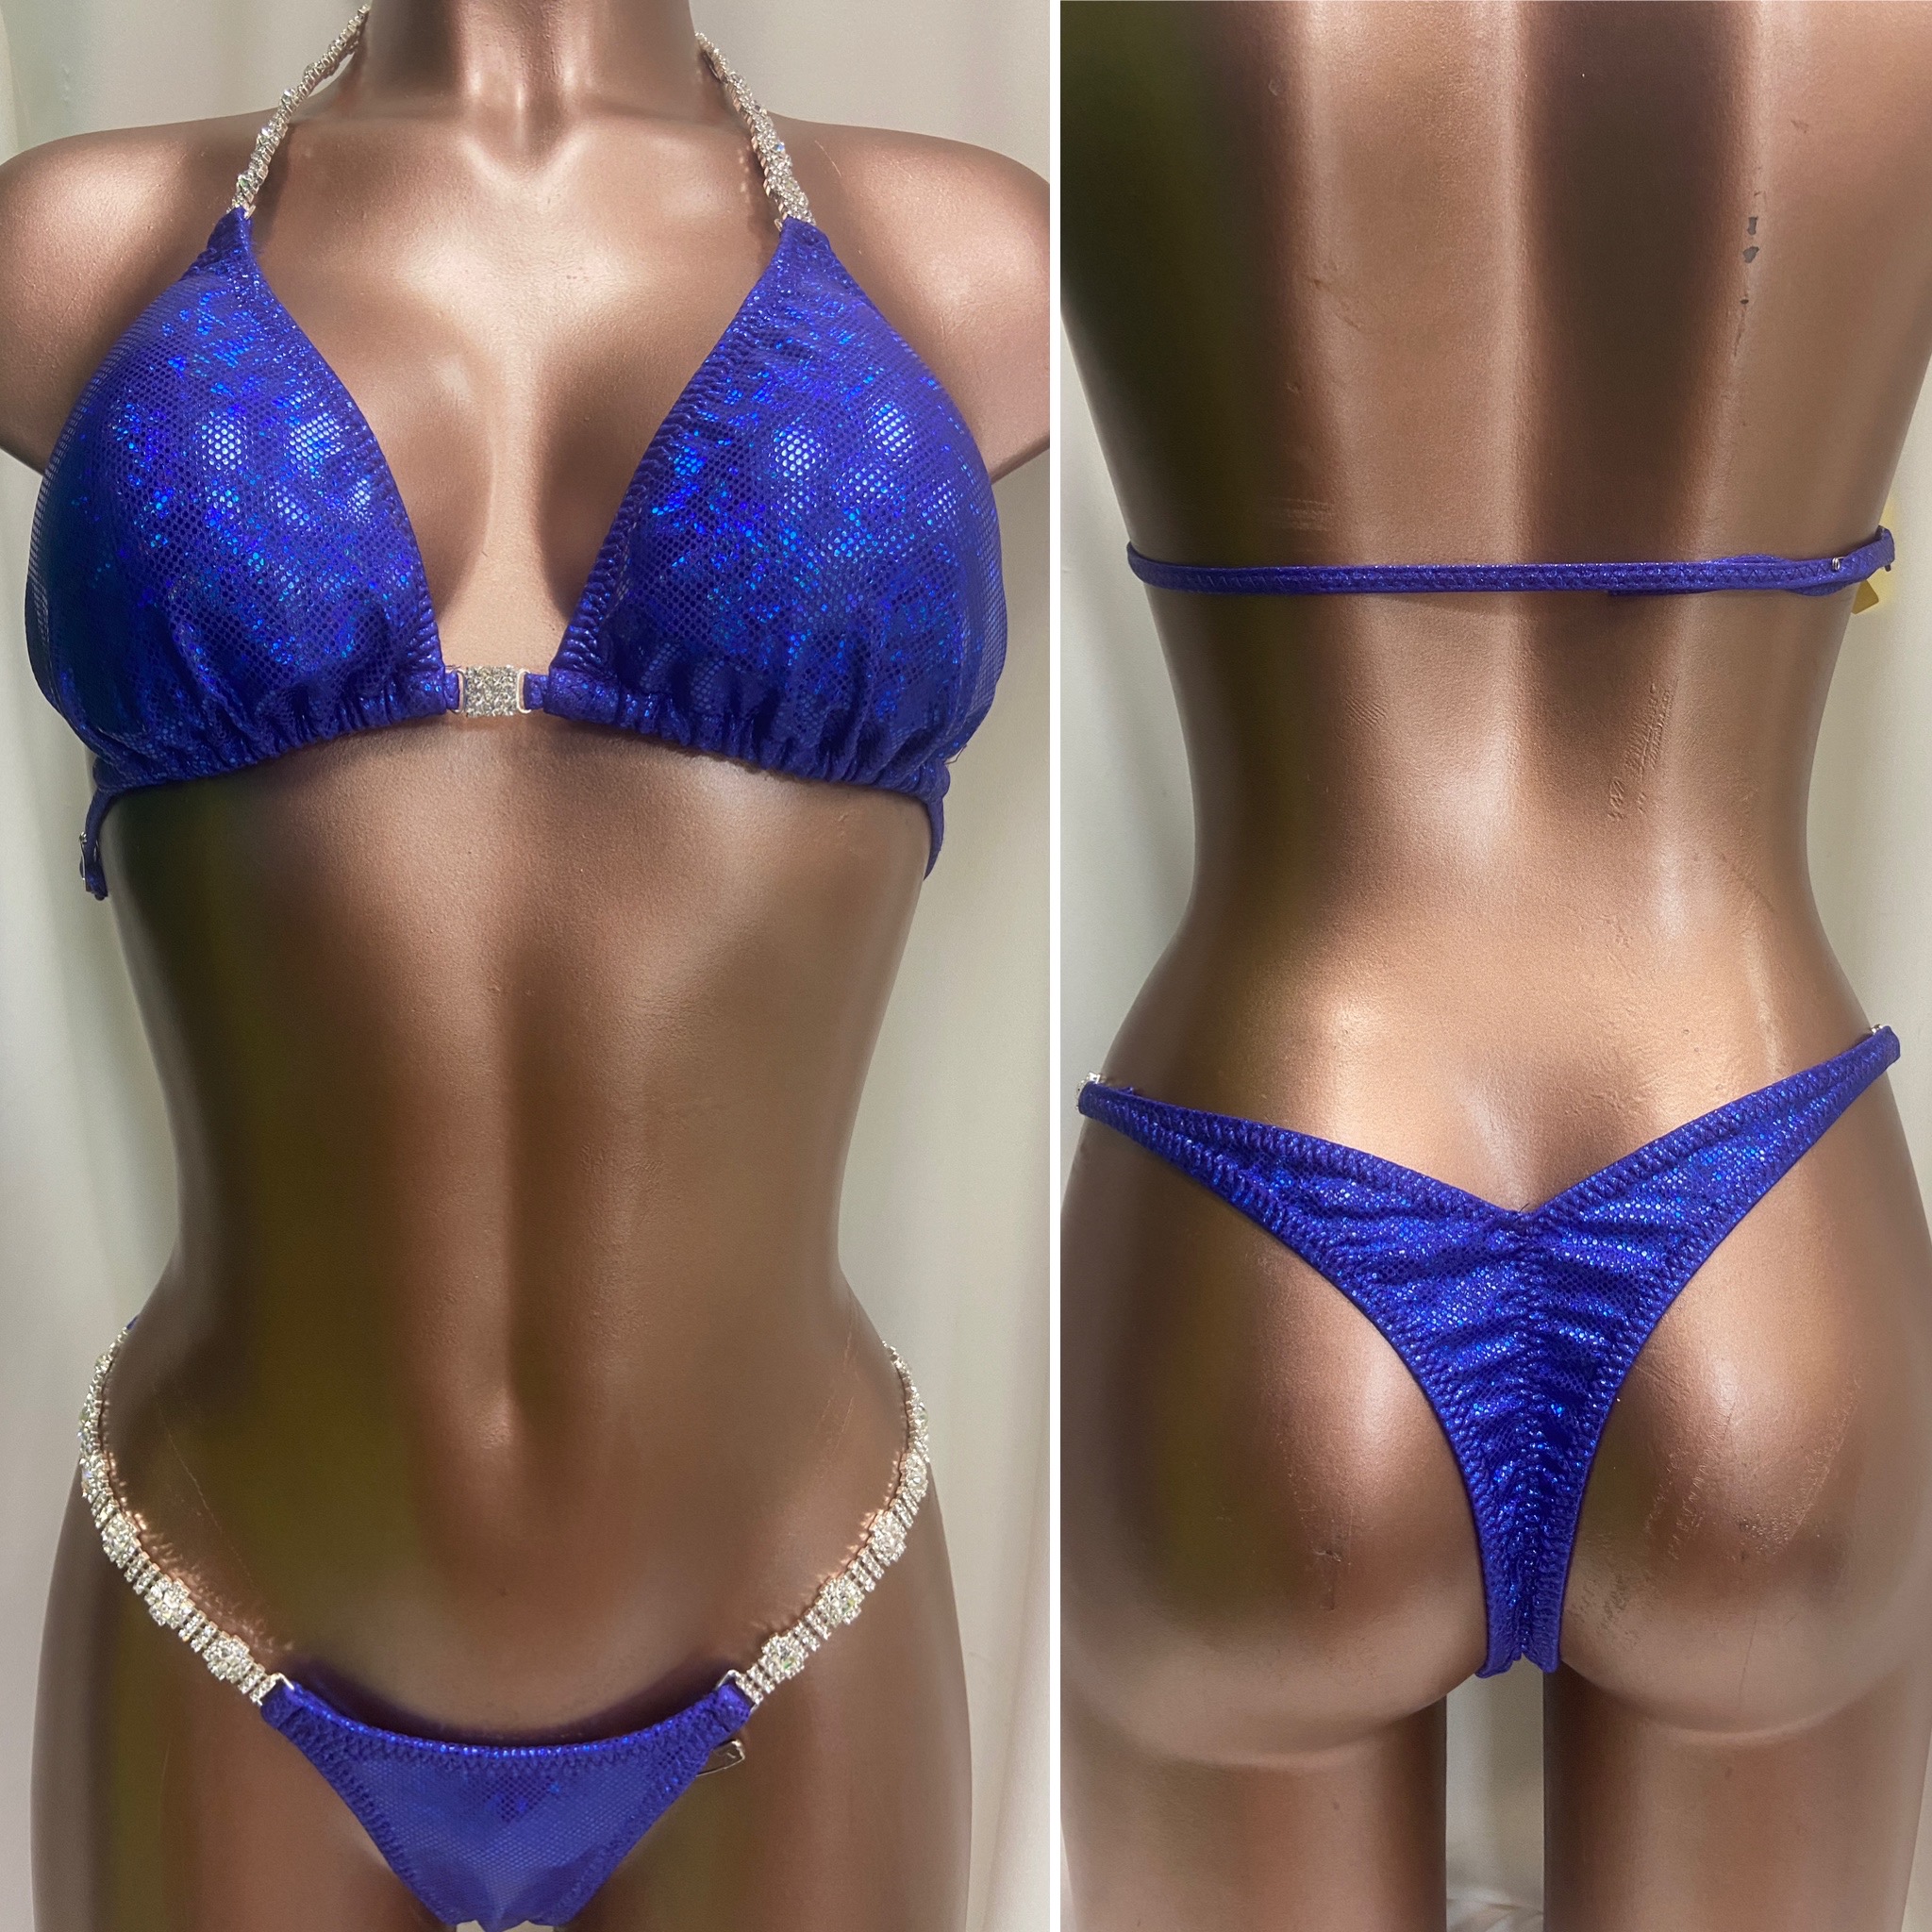 B8
Blue hologram on purple bikini
D slim sliding top
small front , xxxsmall  V back 
$175 